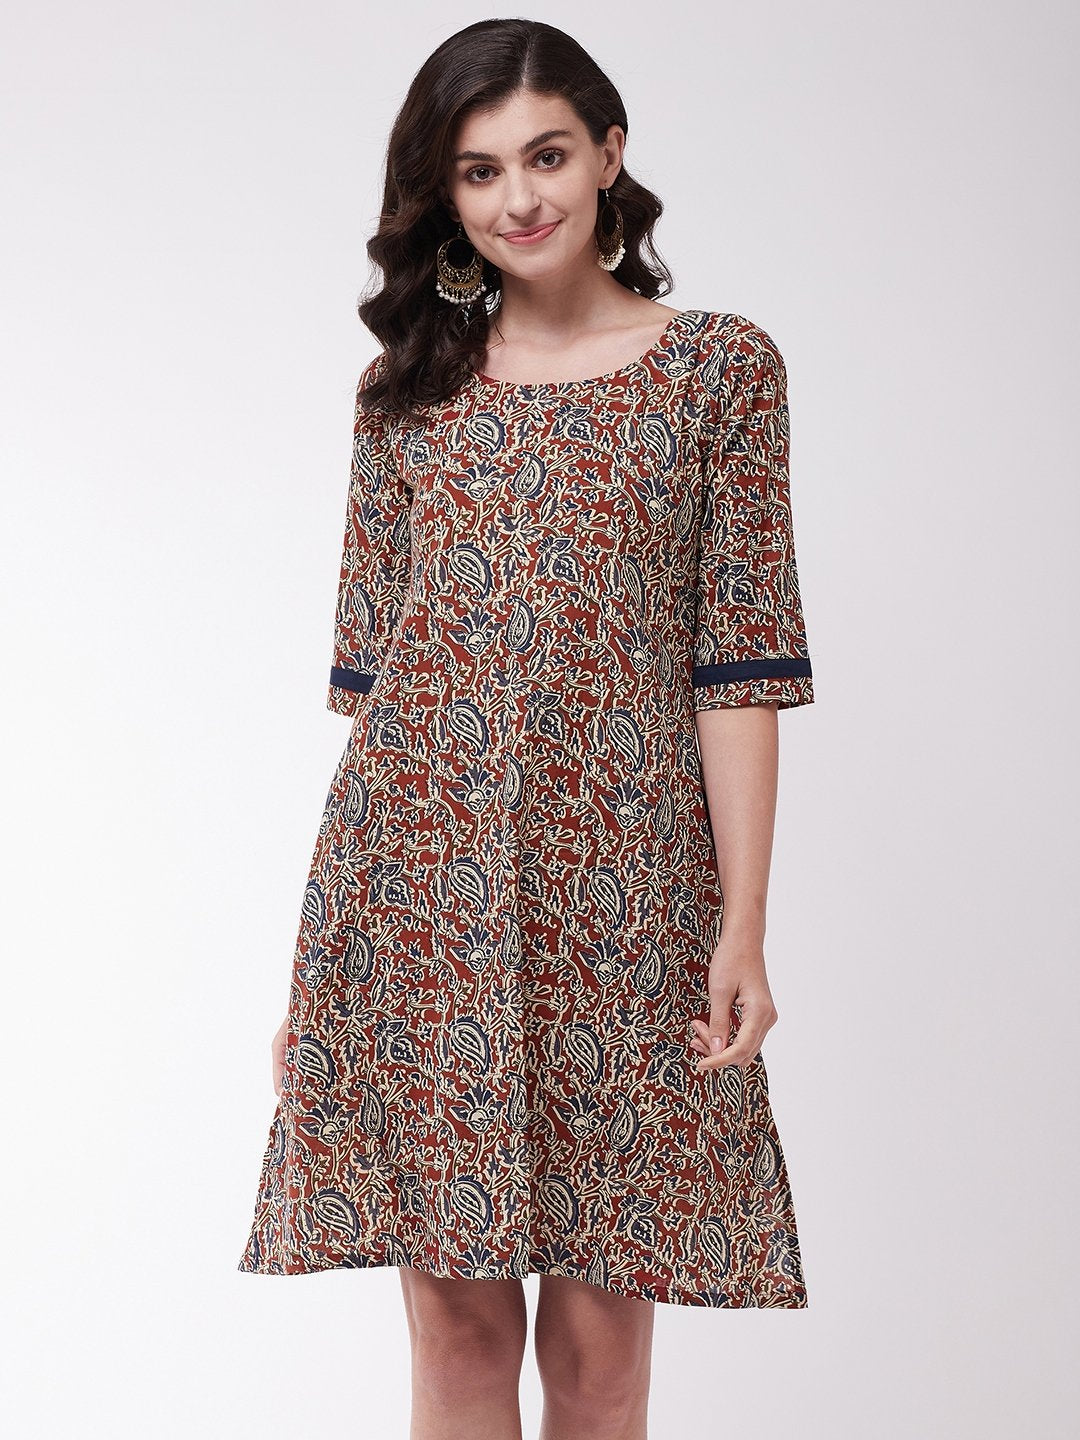 Maroon Kalamkari Short Dress